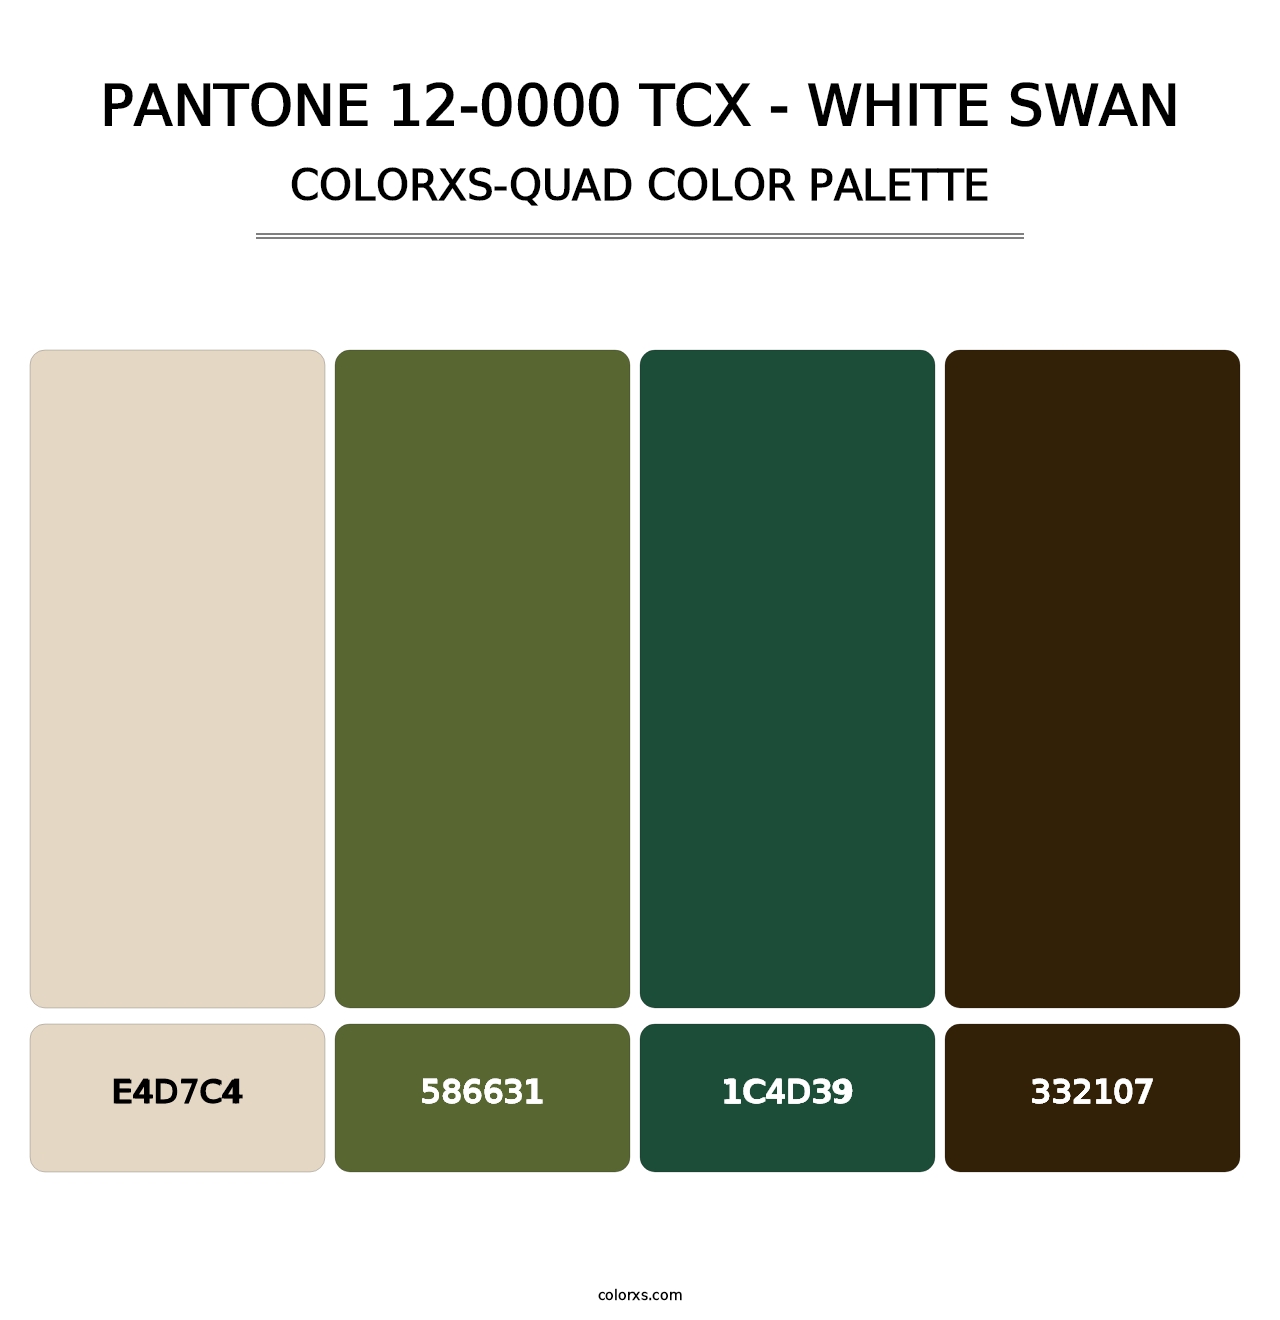 PANTONE 12-0000 TCX - White Swan - Colorxs Quad Palette